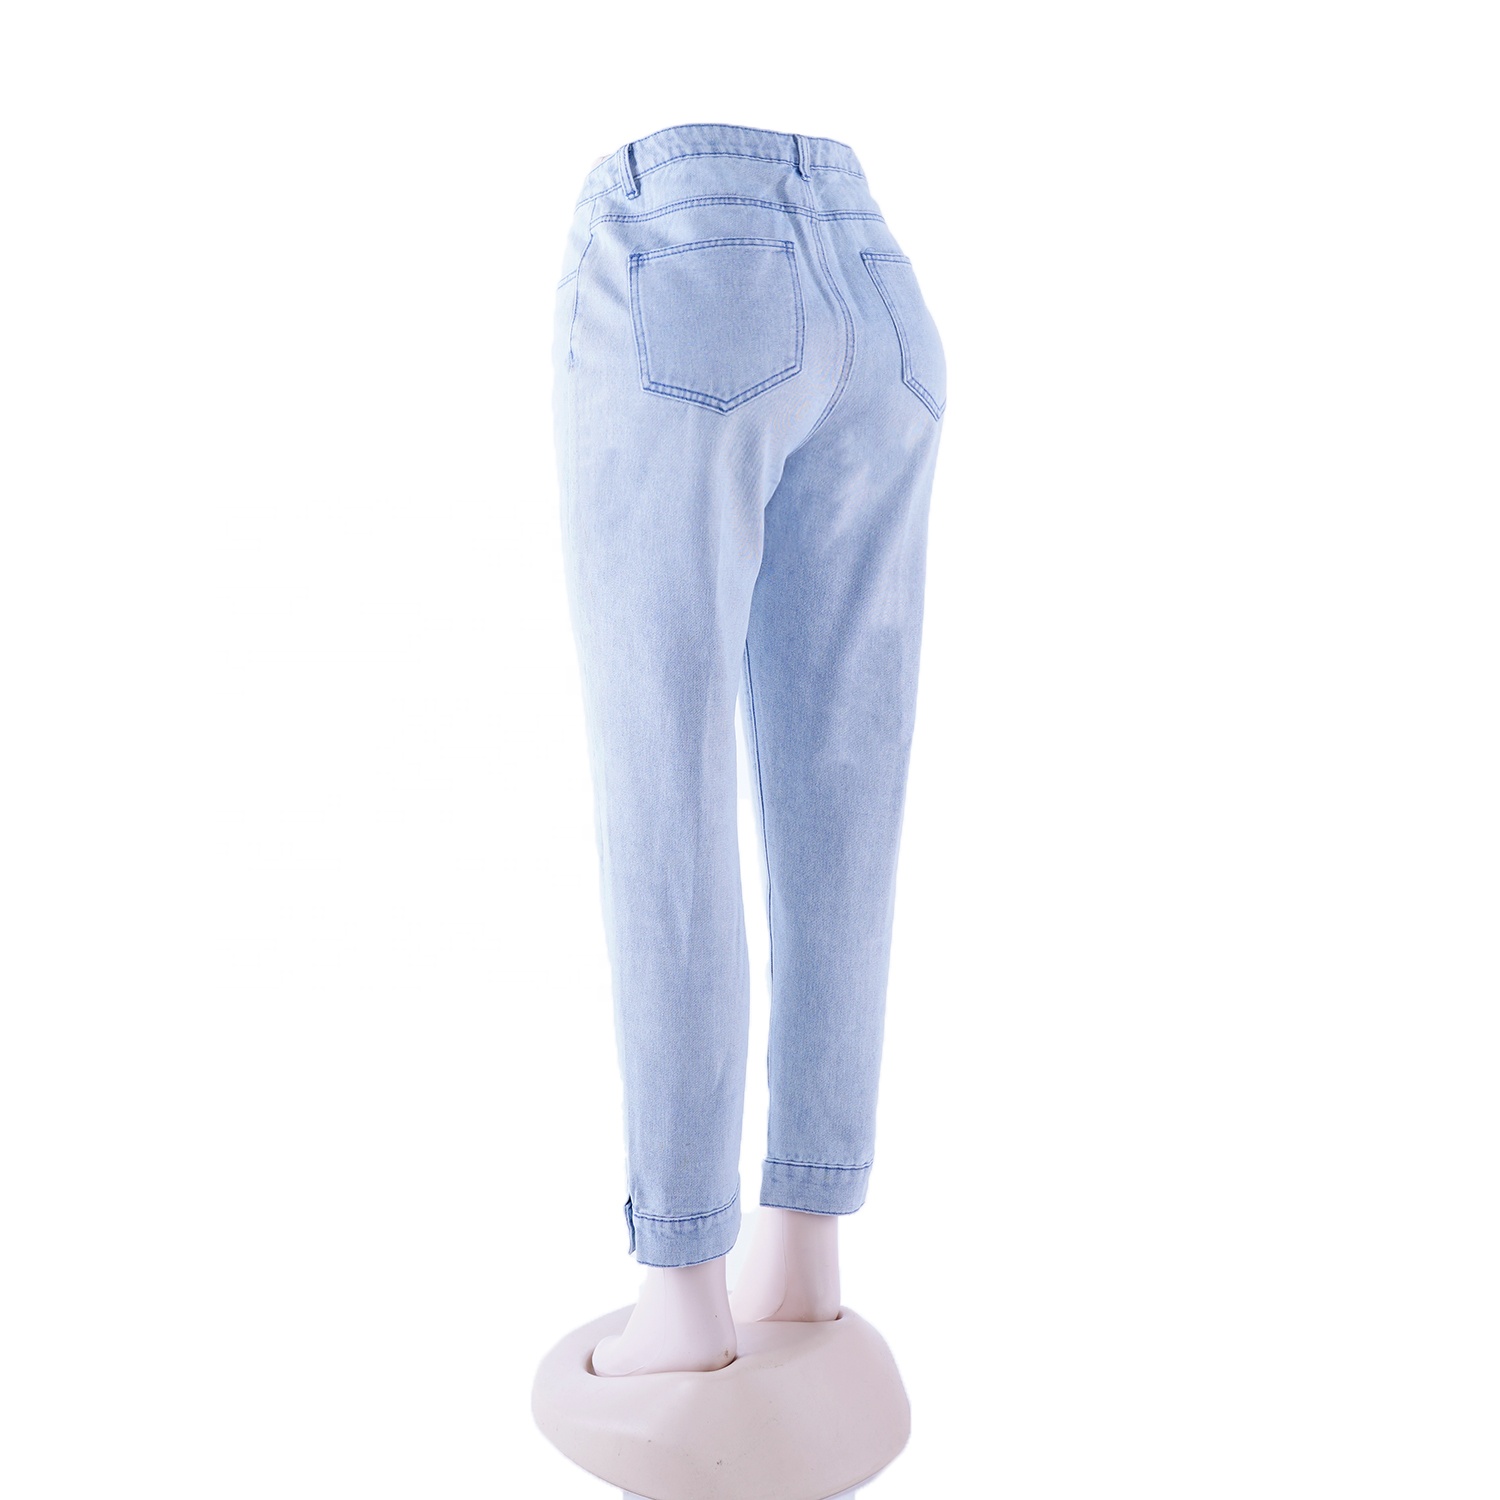 SKYKINGDOM high quality wholesale price jeans women streetwear straight leg with button denim blue jeans